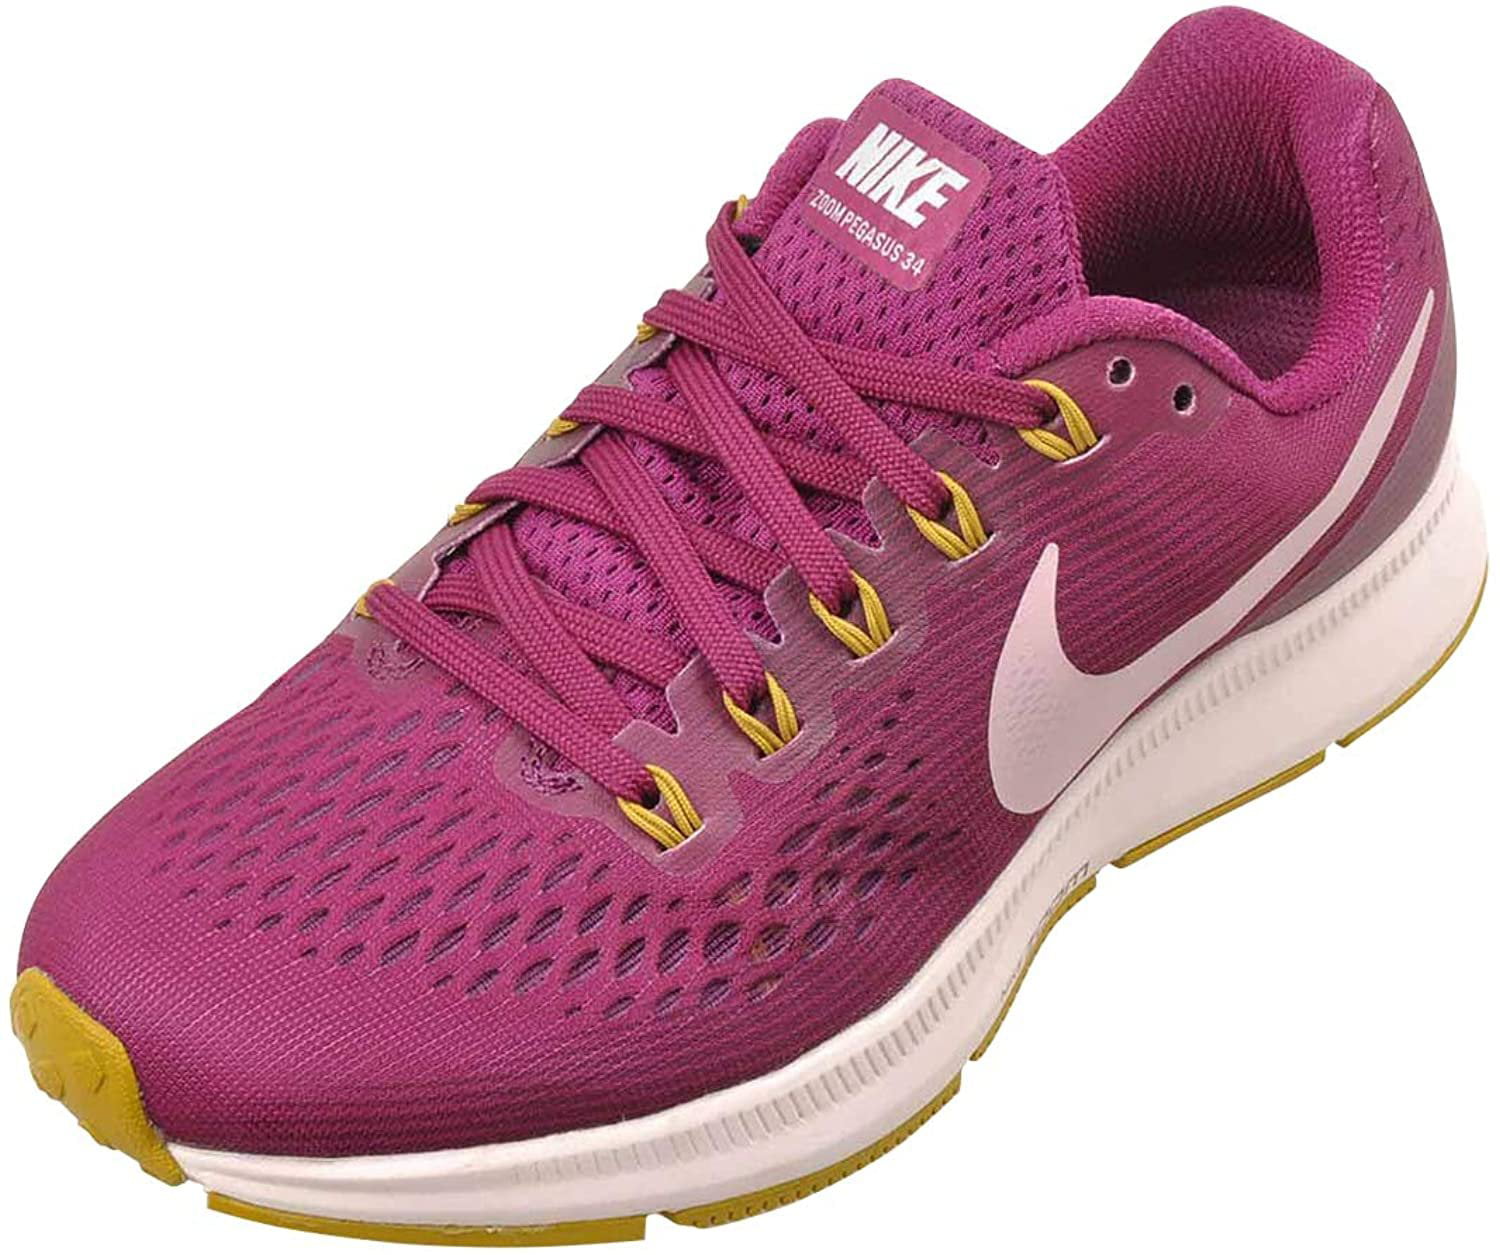 Nike Women's Air Zoom Pegasus Running Shoes - Walmart.com